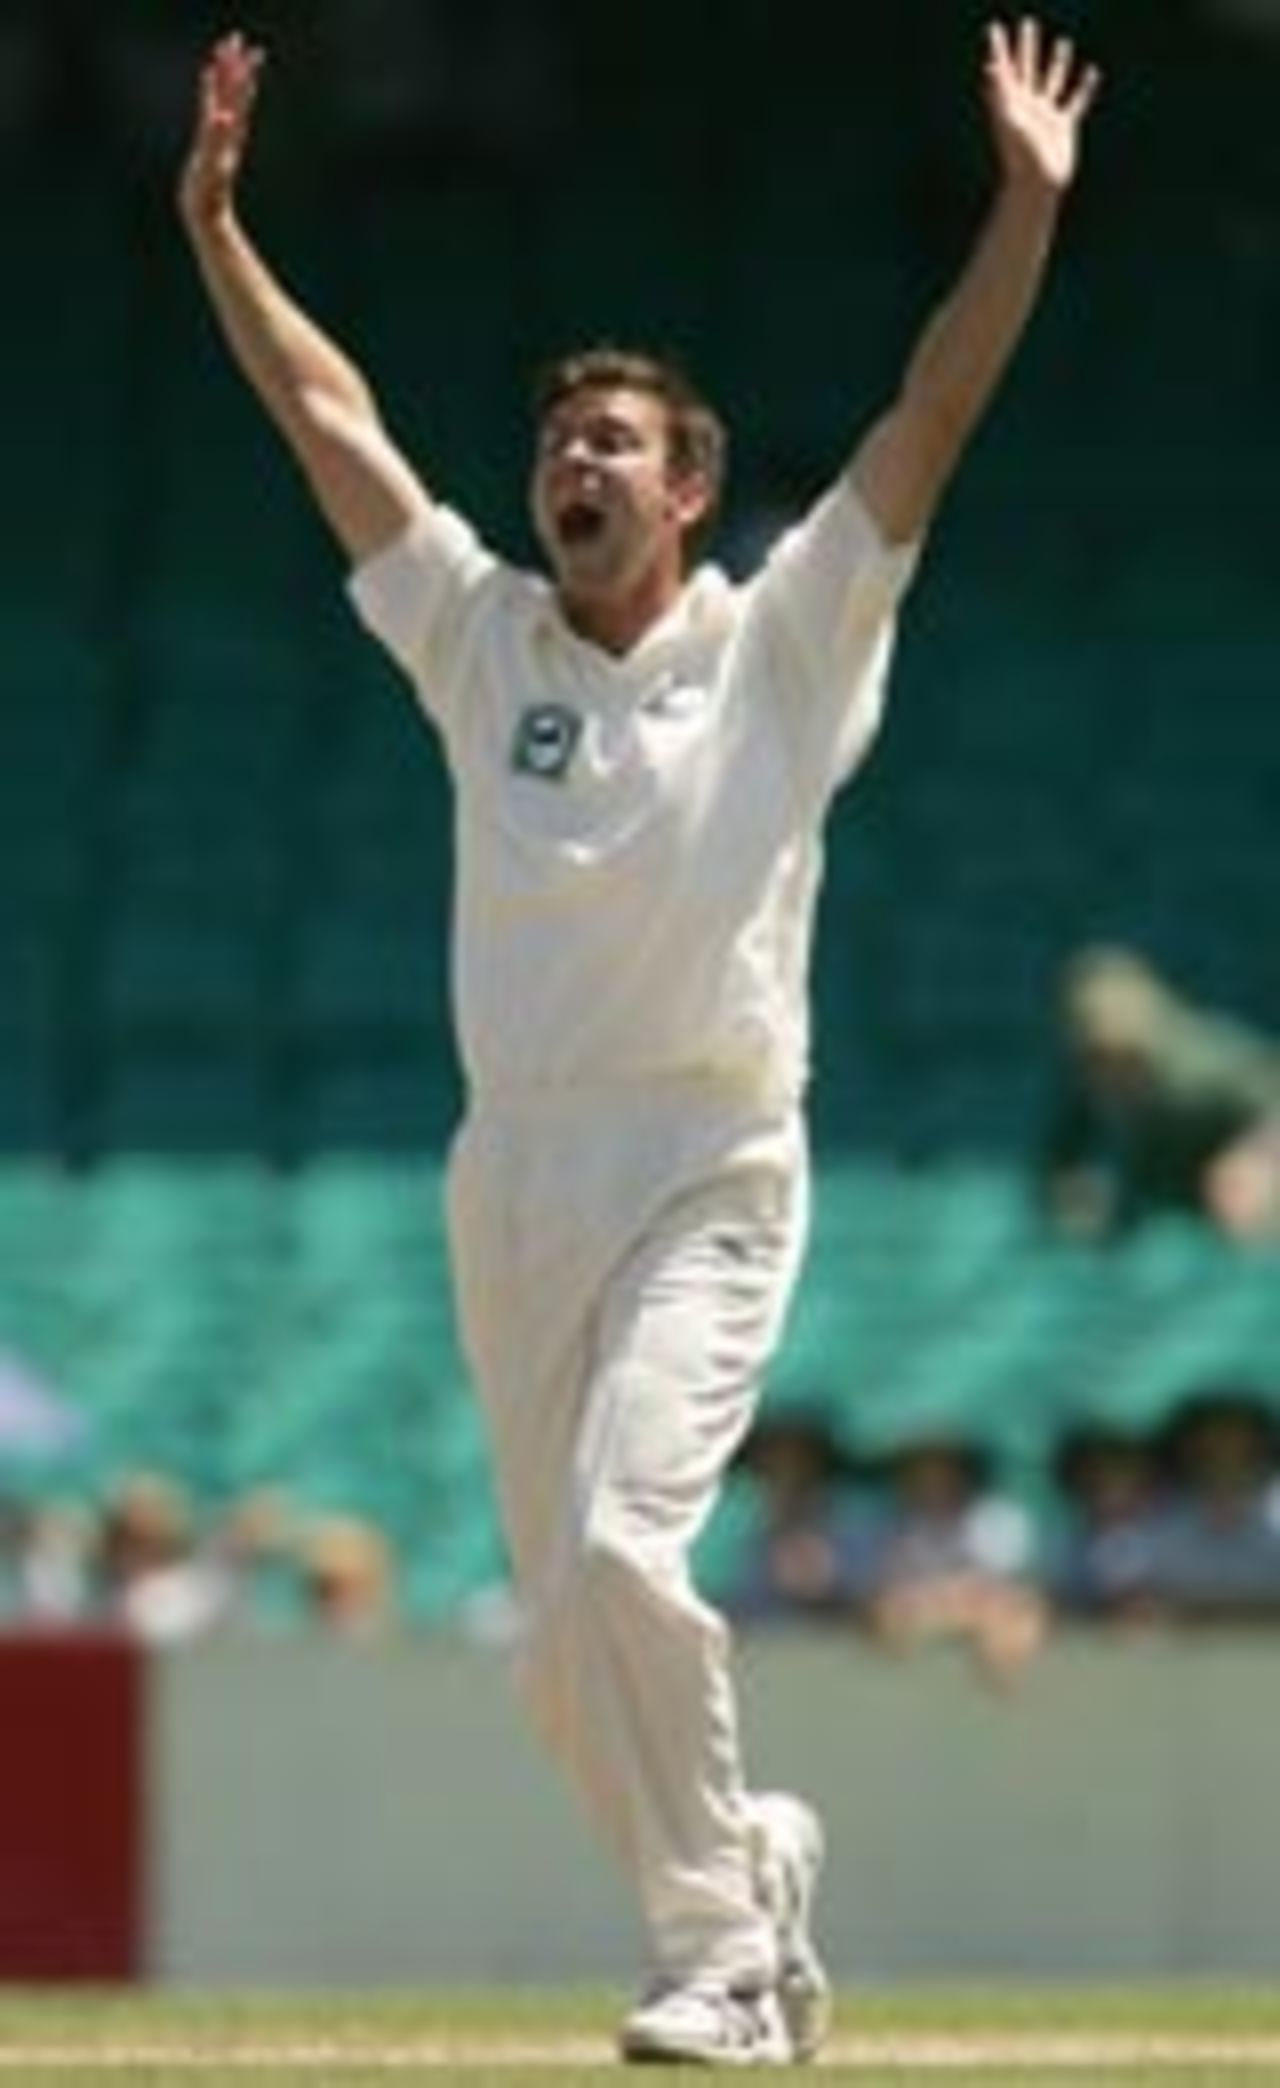 James Franklin celebrates a wicket, New South Wales v New Zealand, SCG, November 12 2004